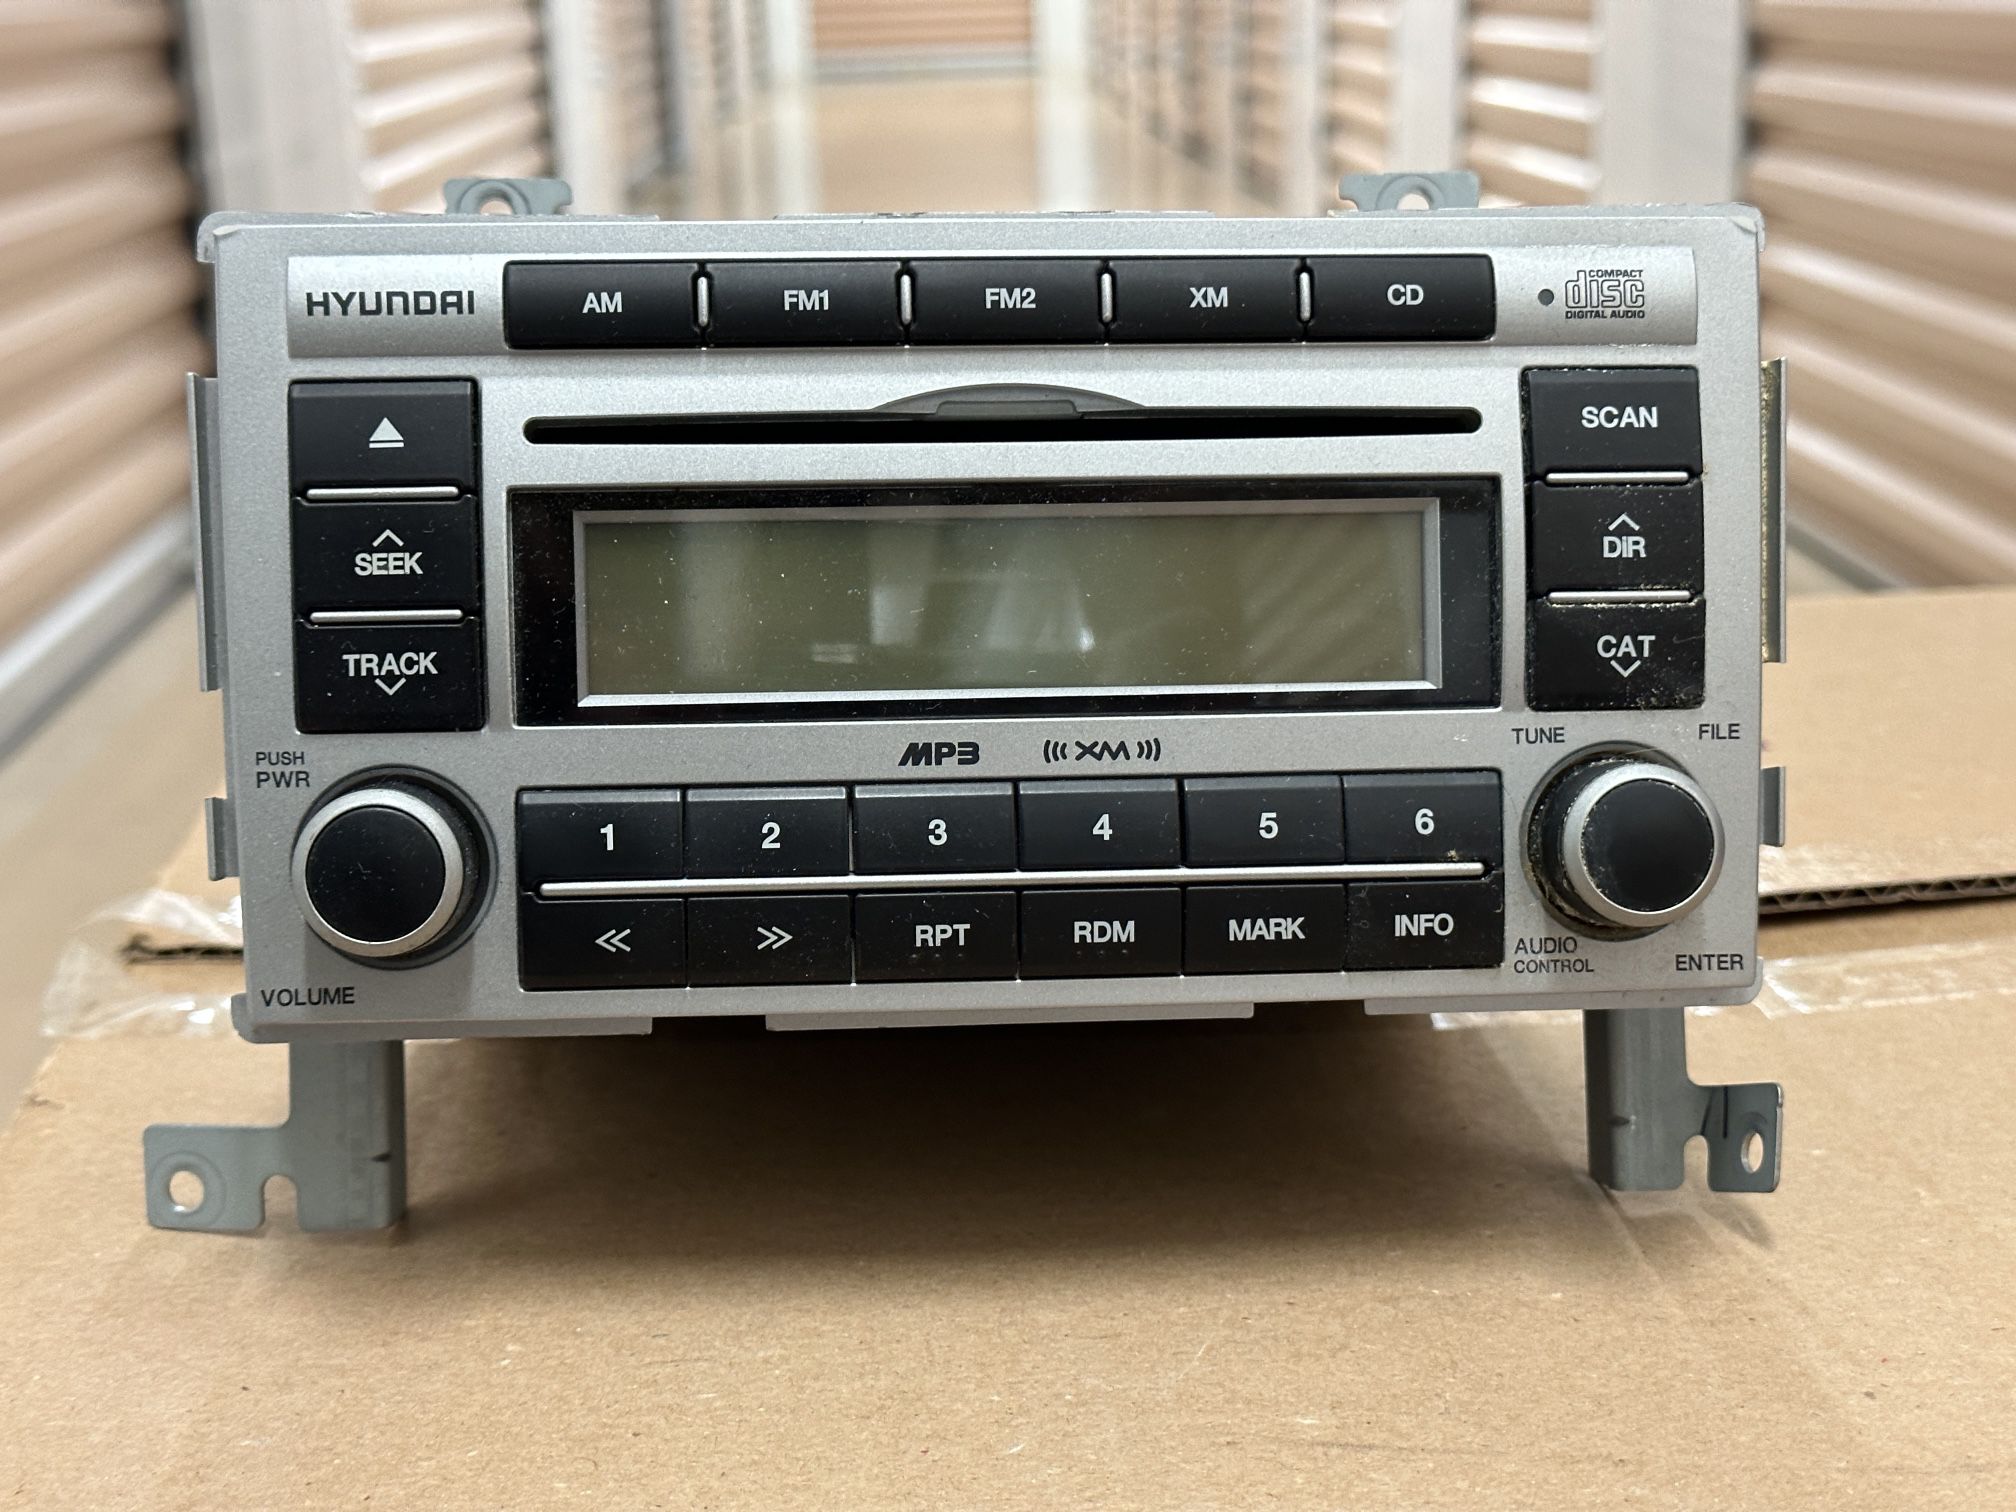 Genuine 2007-2008 Hyundai Santa Fe AM/FM CD Stereo MP3 Radio Receiver w/ Satellite